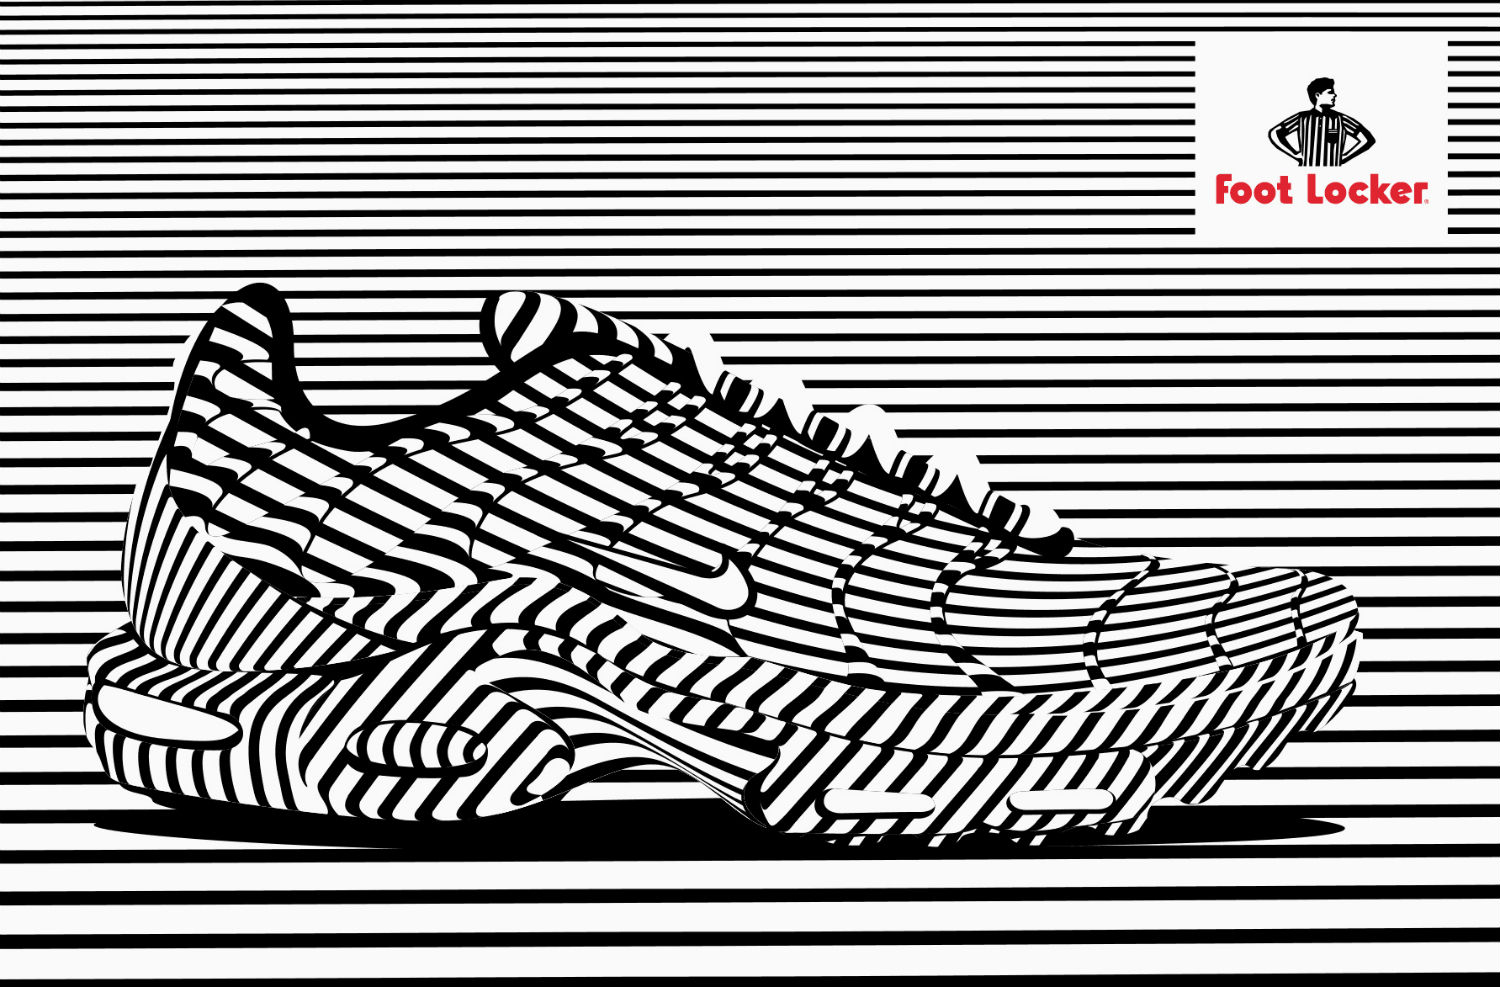 alex trochut black white illusion illustration foot locker graphic design